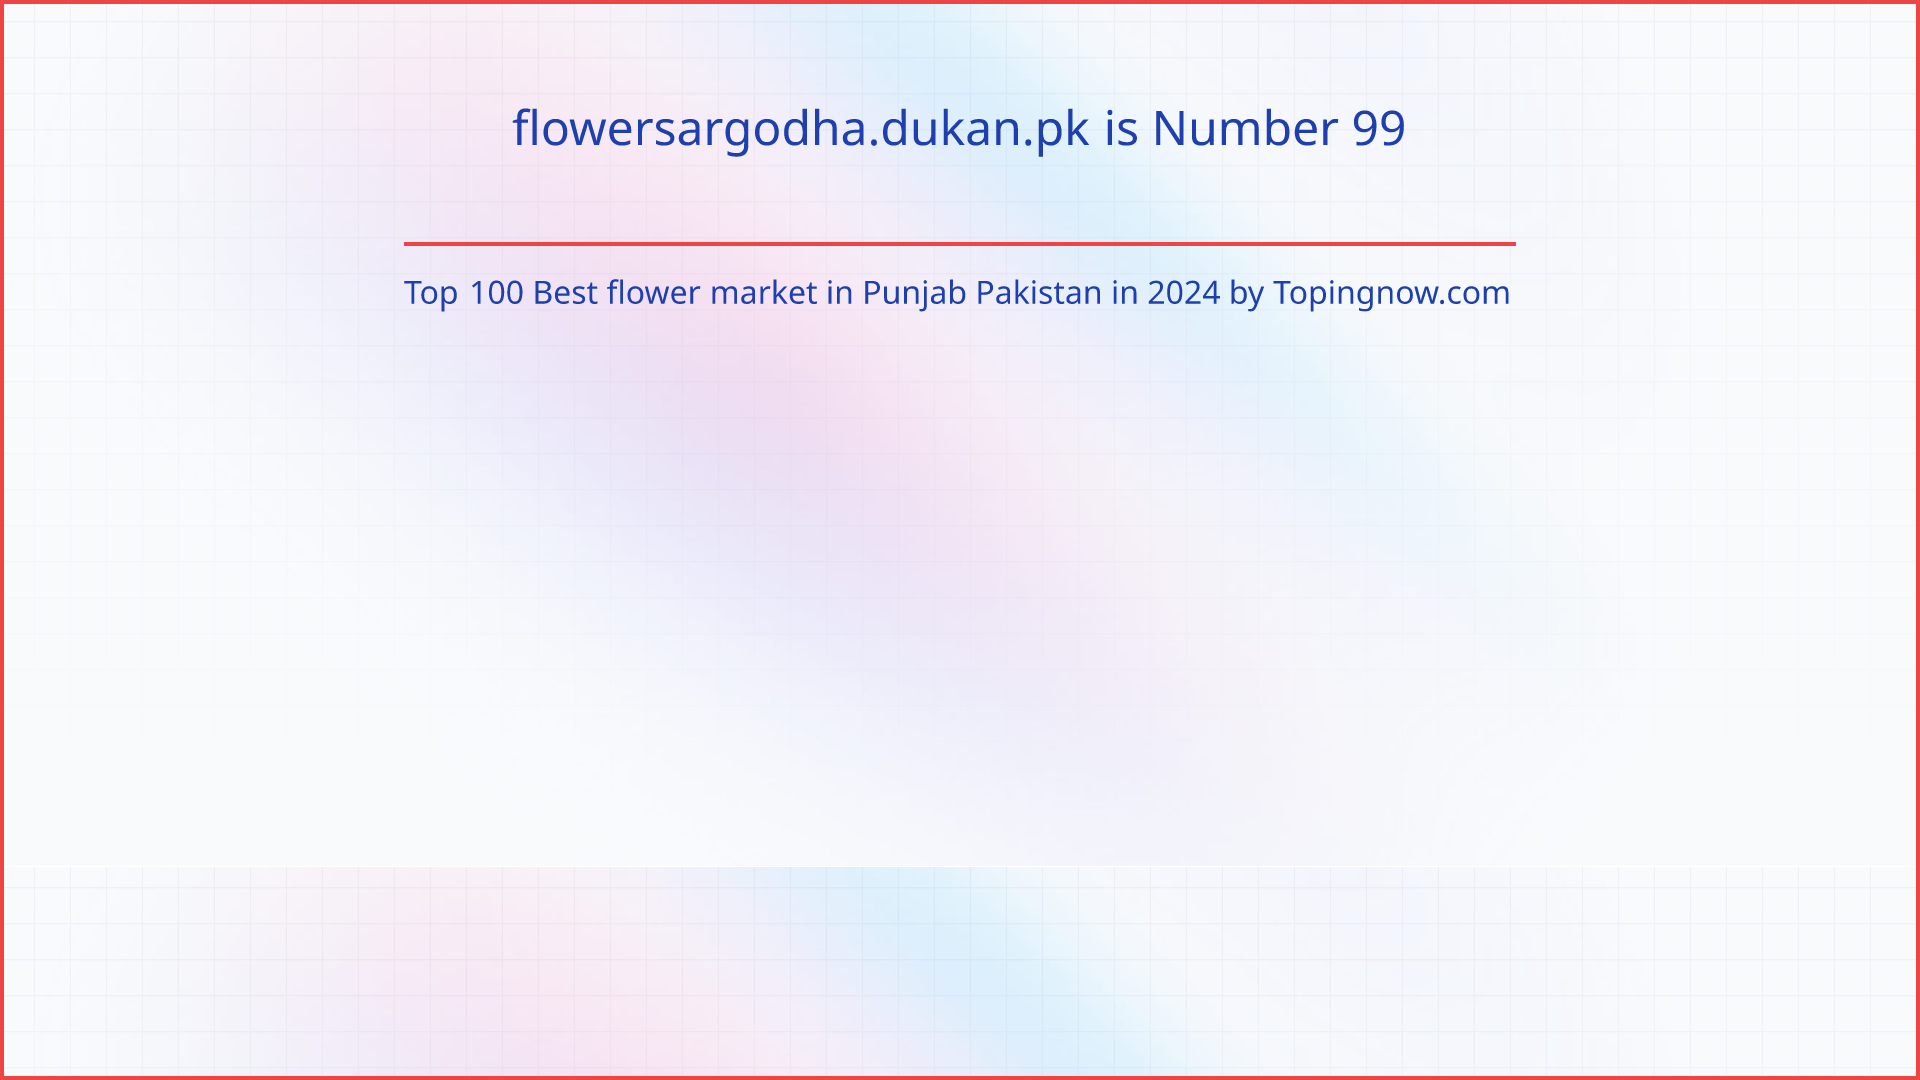 flowersargodha.dukan.pk: Top 100 Best flower market in Punjab Pakistan in 2024